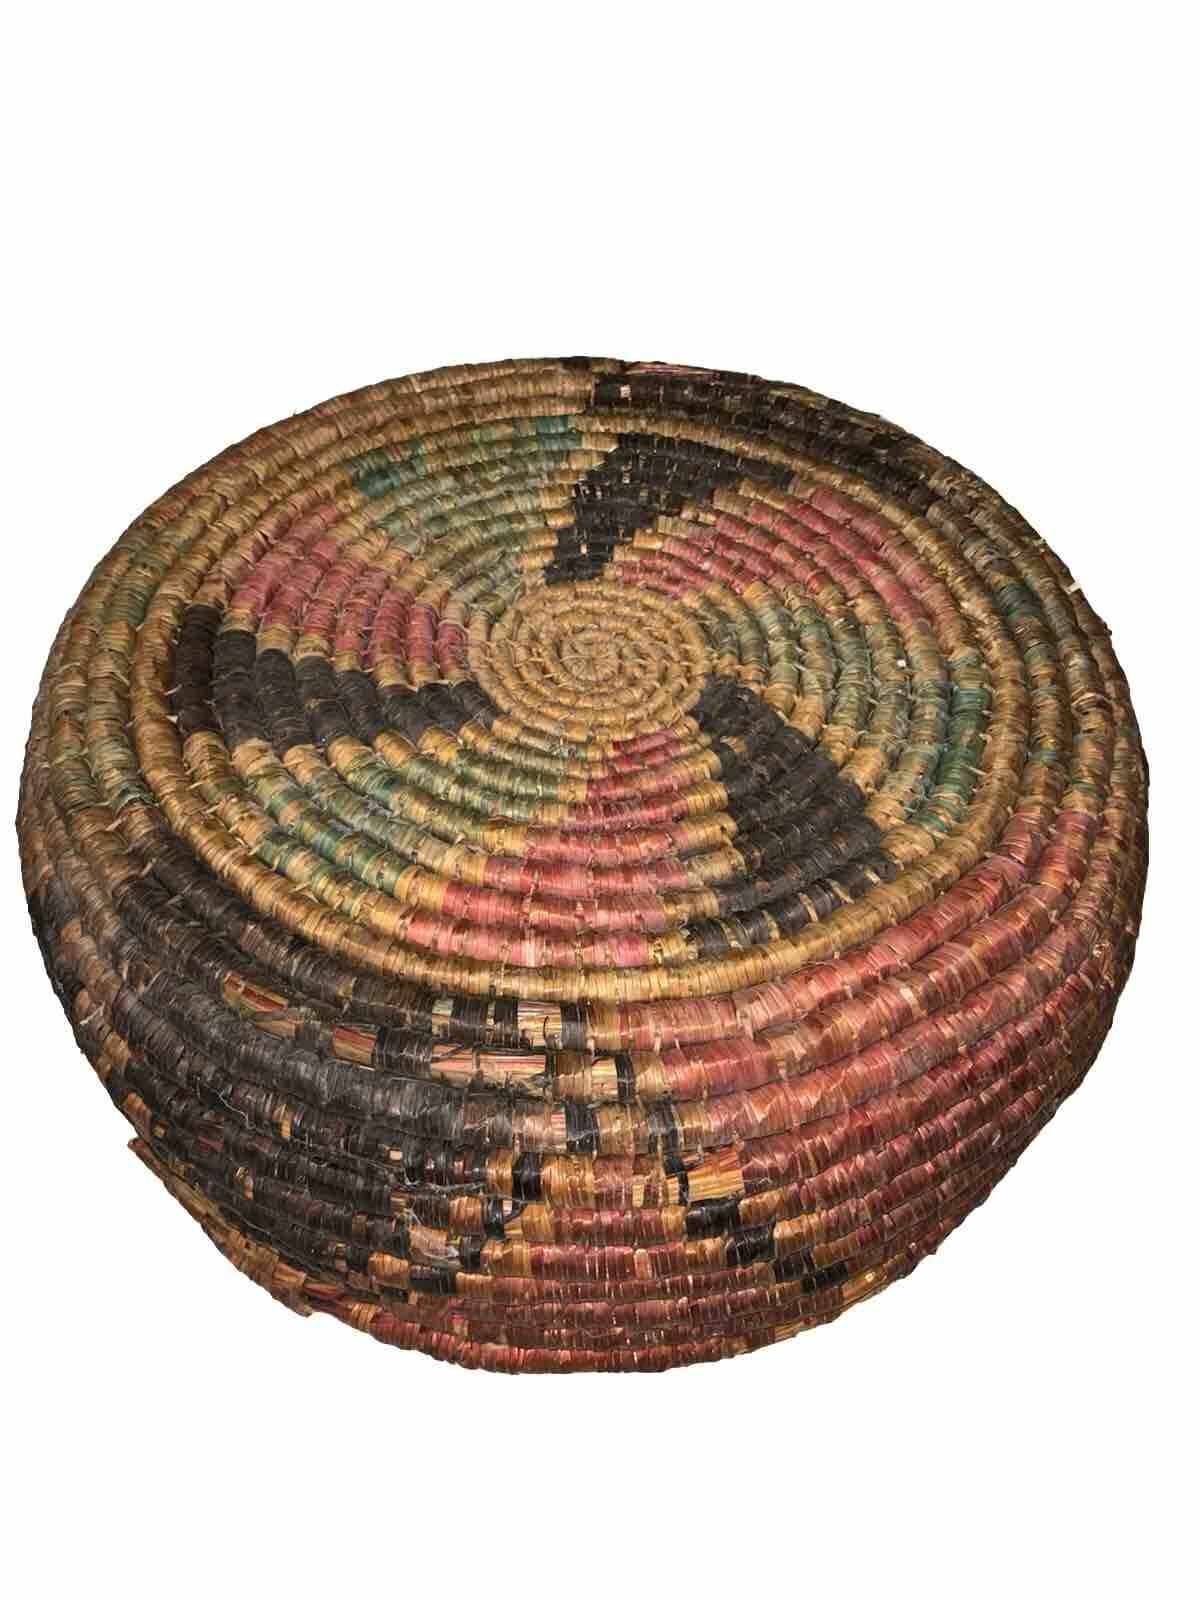 Large Antique 19th C Native American Indian Basket